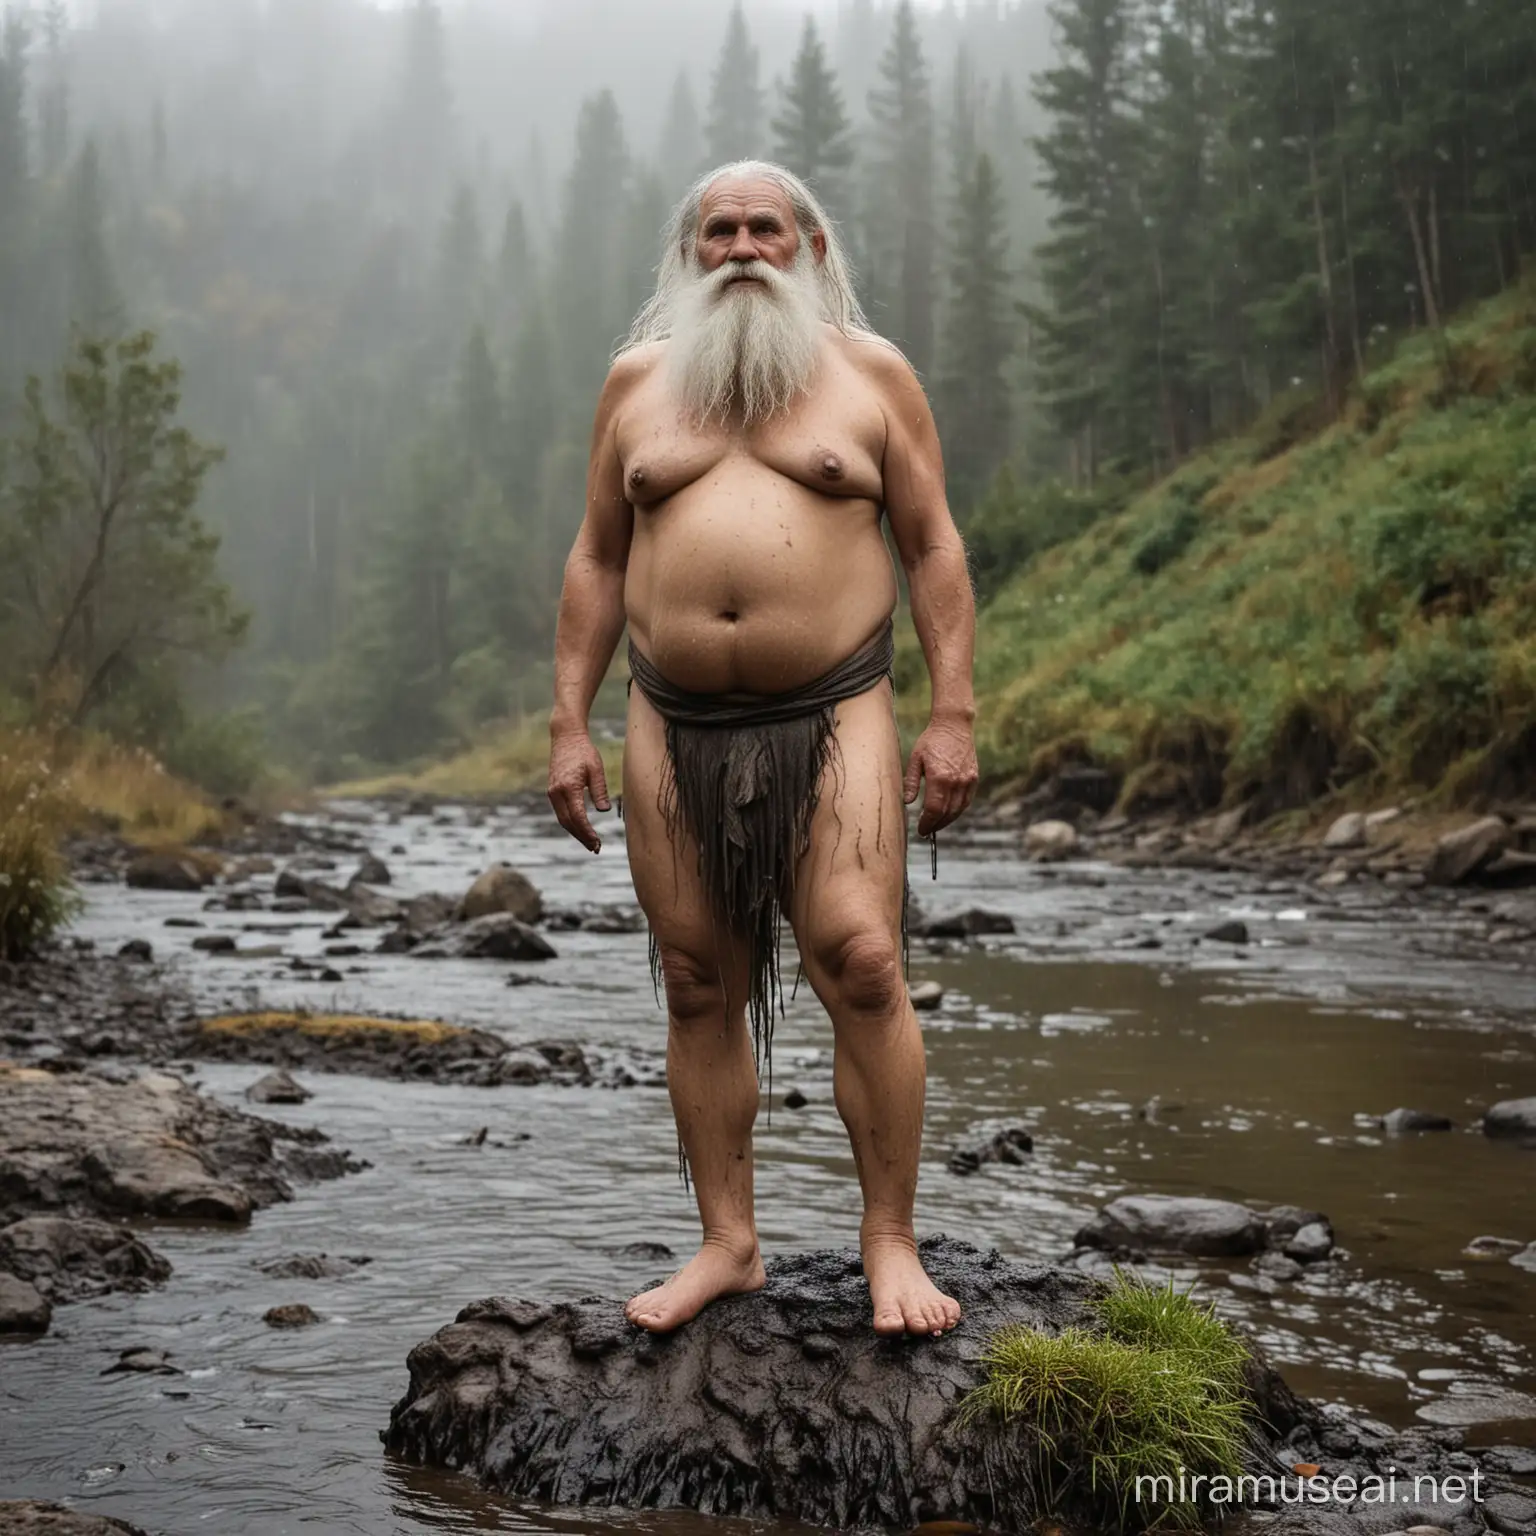 troll,mountain trod by creek,large feet,naked,loincloth,dumpy,chubby,primitive,hairy,long beard,old age,standing on a rock of creek,rainy,wet dirty black mud on body